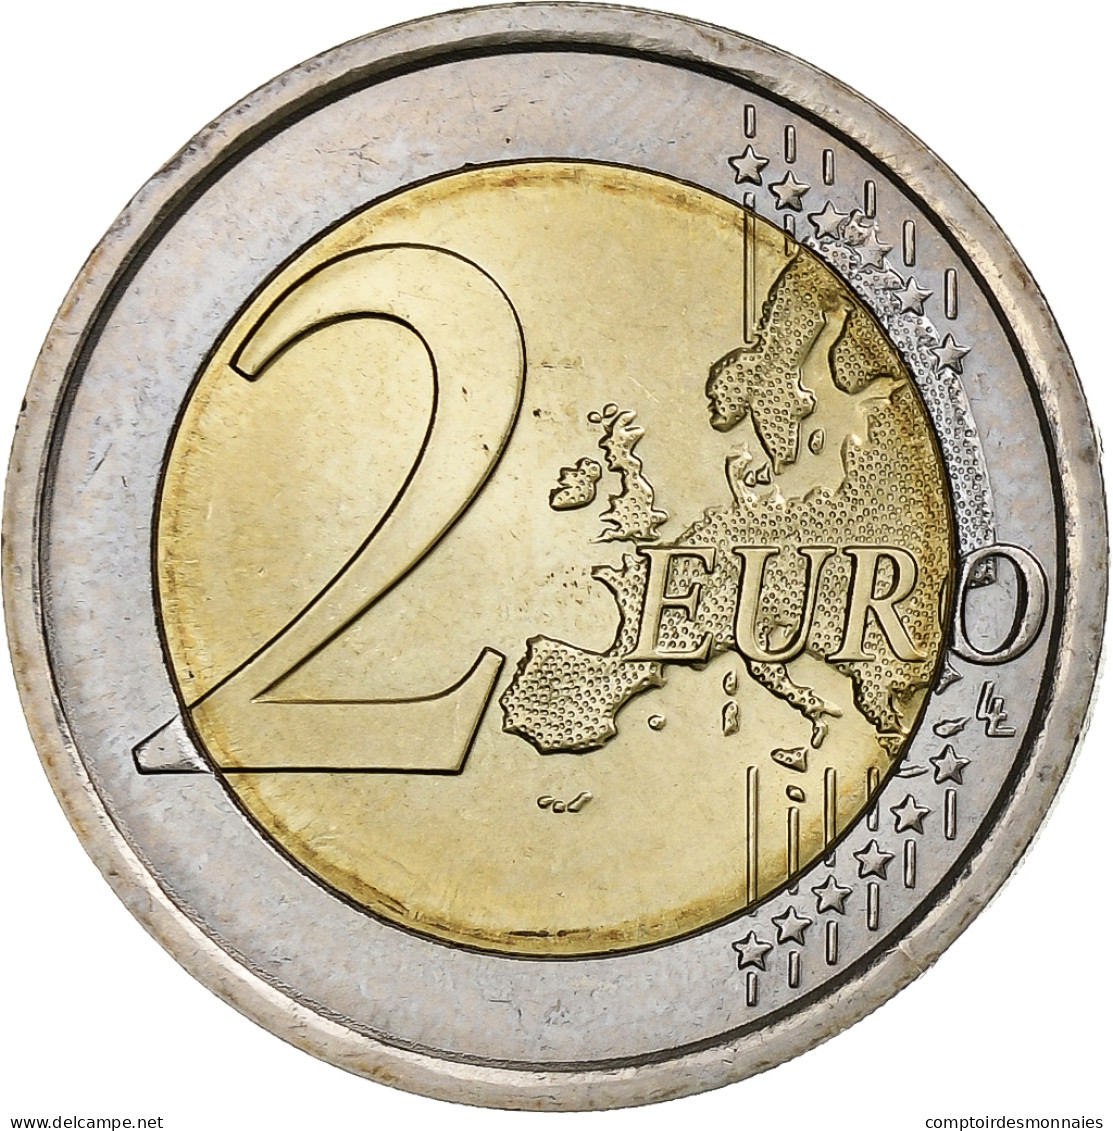 Italie, 2 Euro, Boccaccio, 2013, Rome, SPL, Bimétallique, KM:251 - Italien